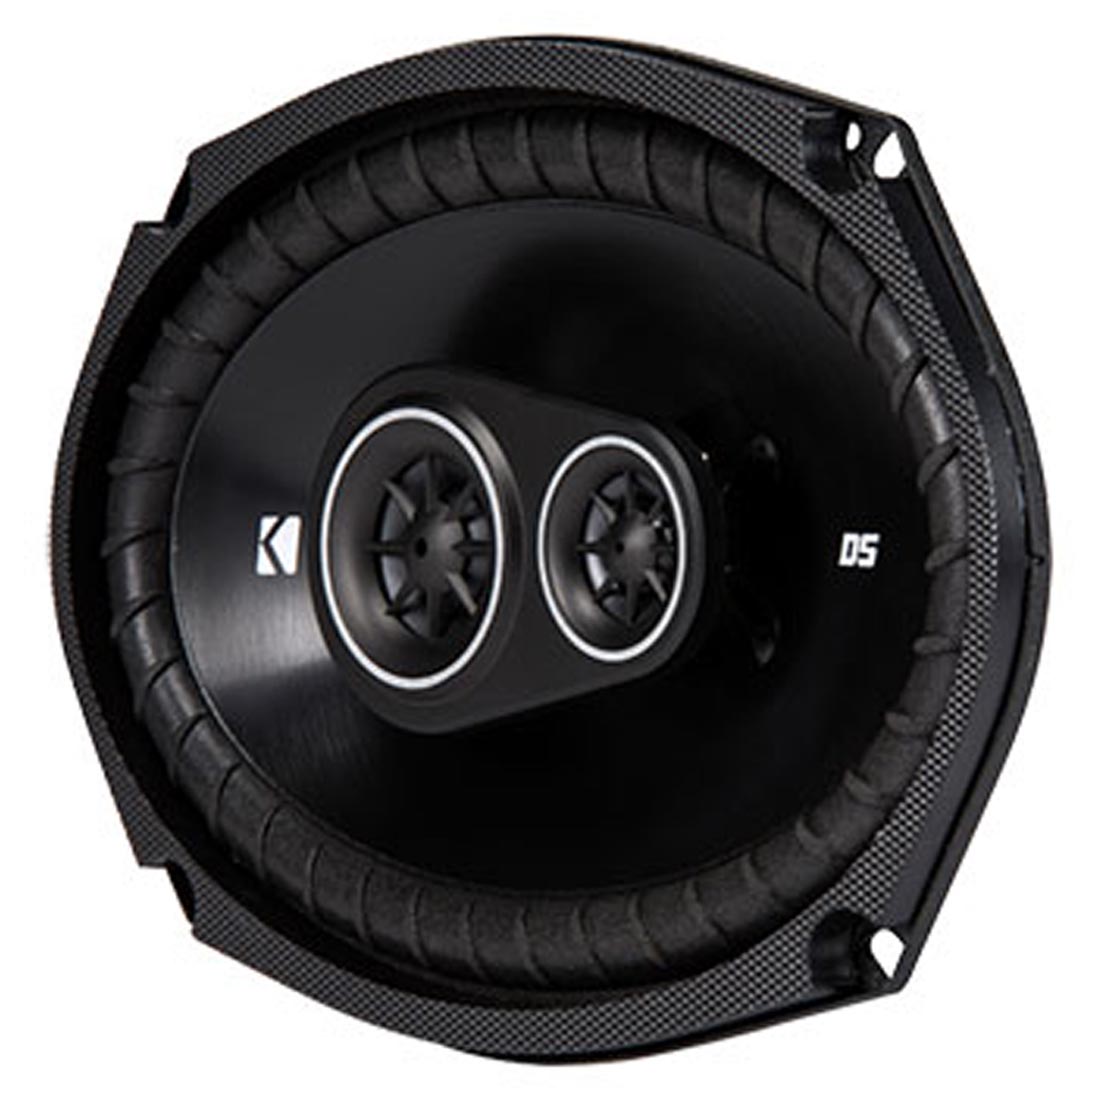 Kicker 43DSC69304 DS Series 6"x9" 3-Way Car Speakers